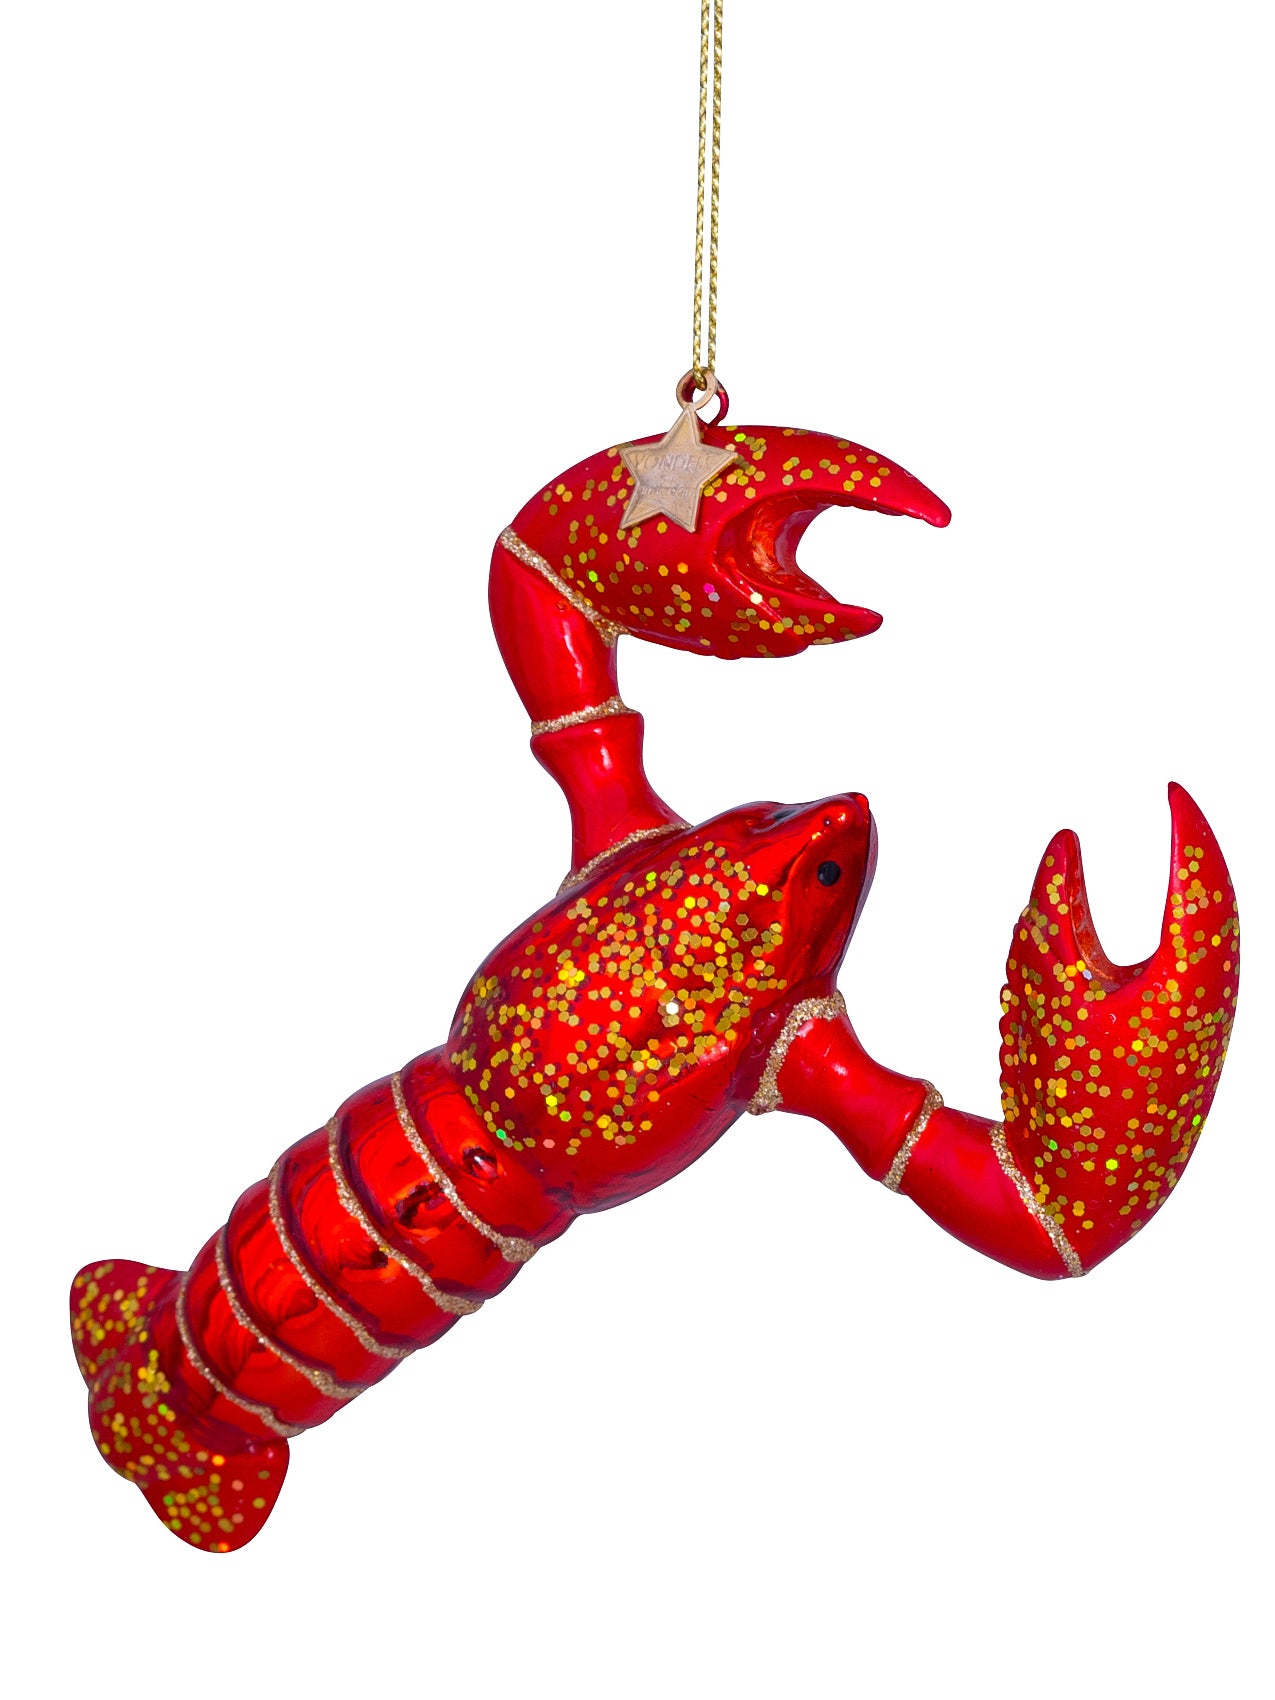 Lobster glass ornament (14 cm)